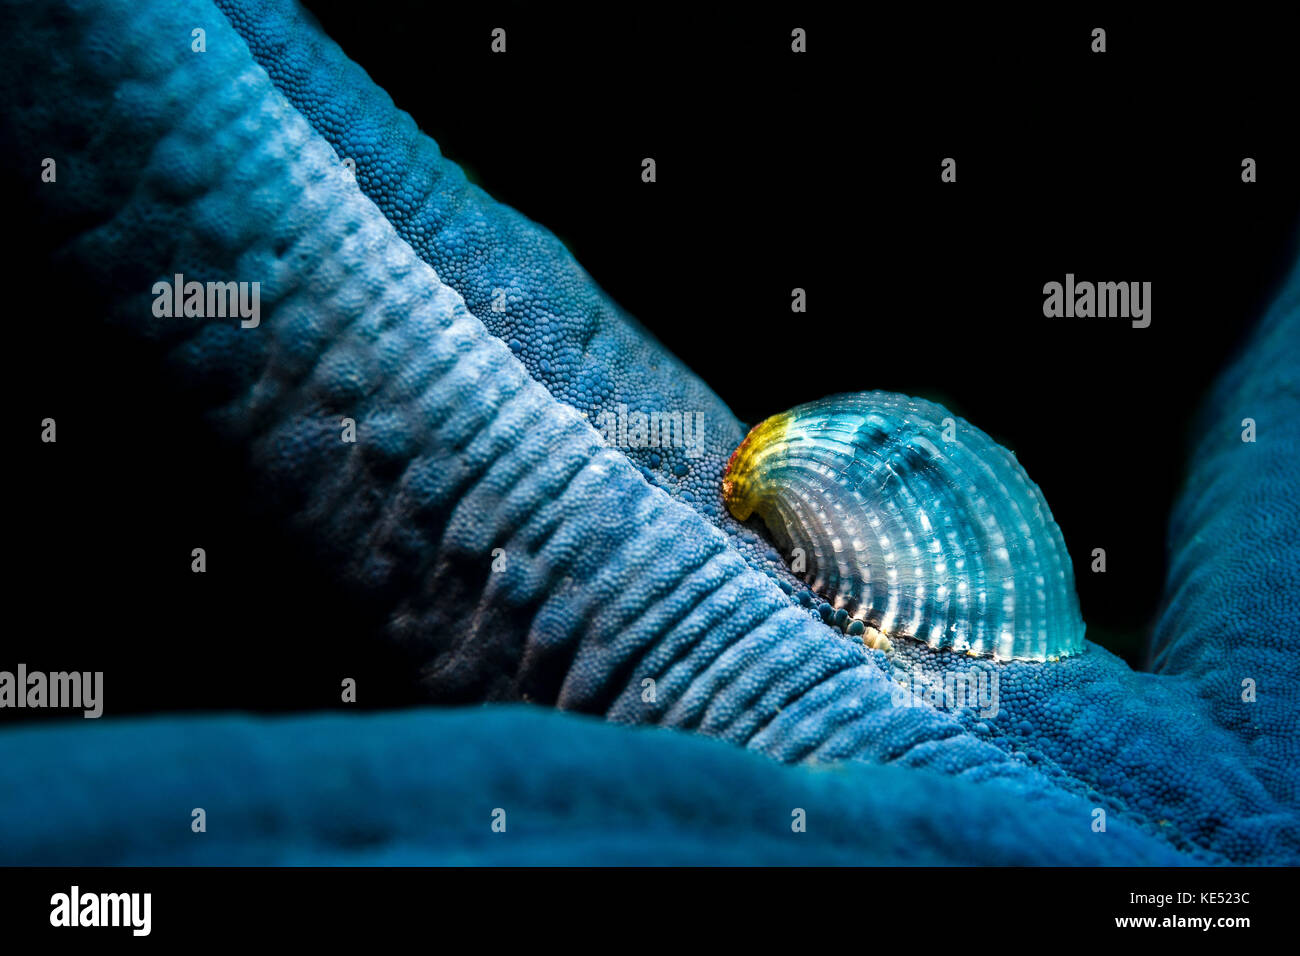 A parasitic crystalline sea star snail hosted by a blue sea star. Stock Photo